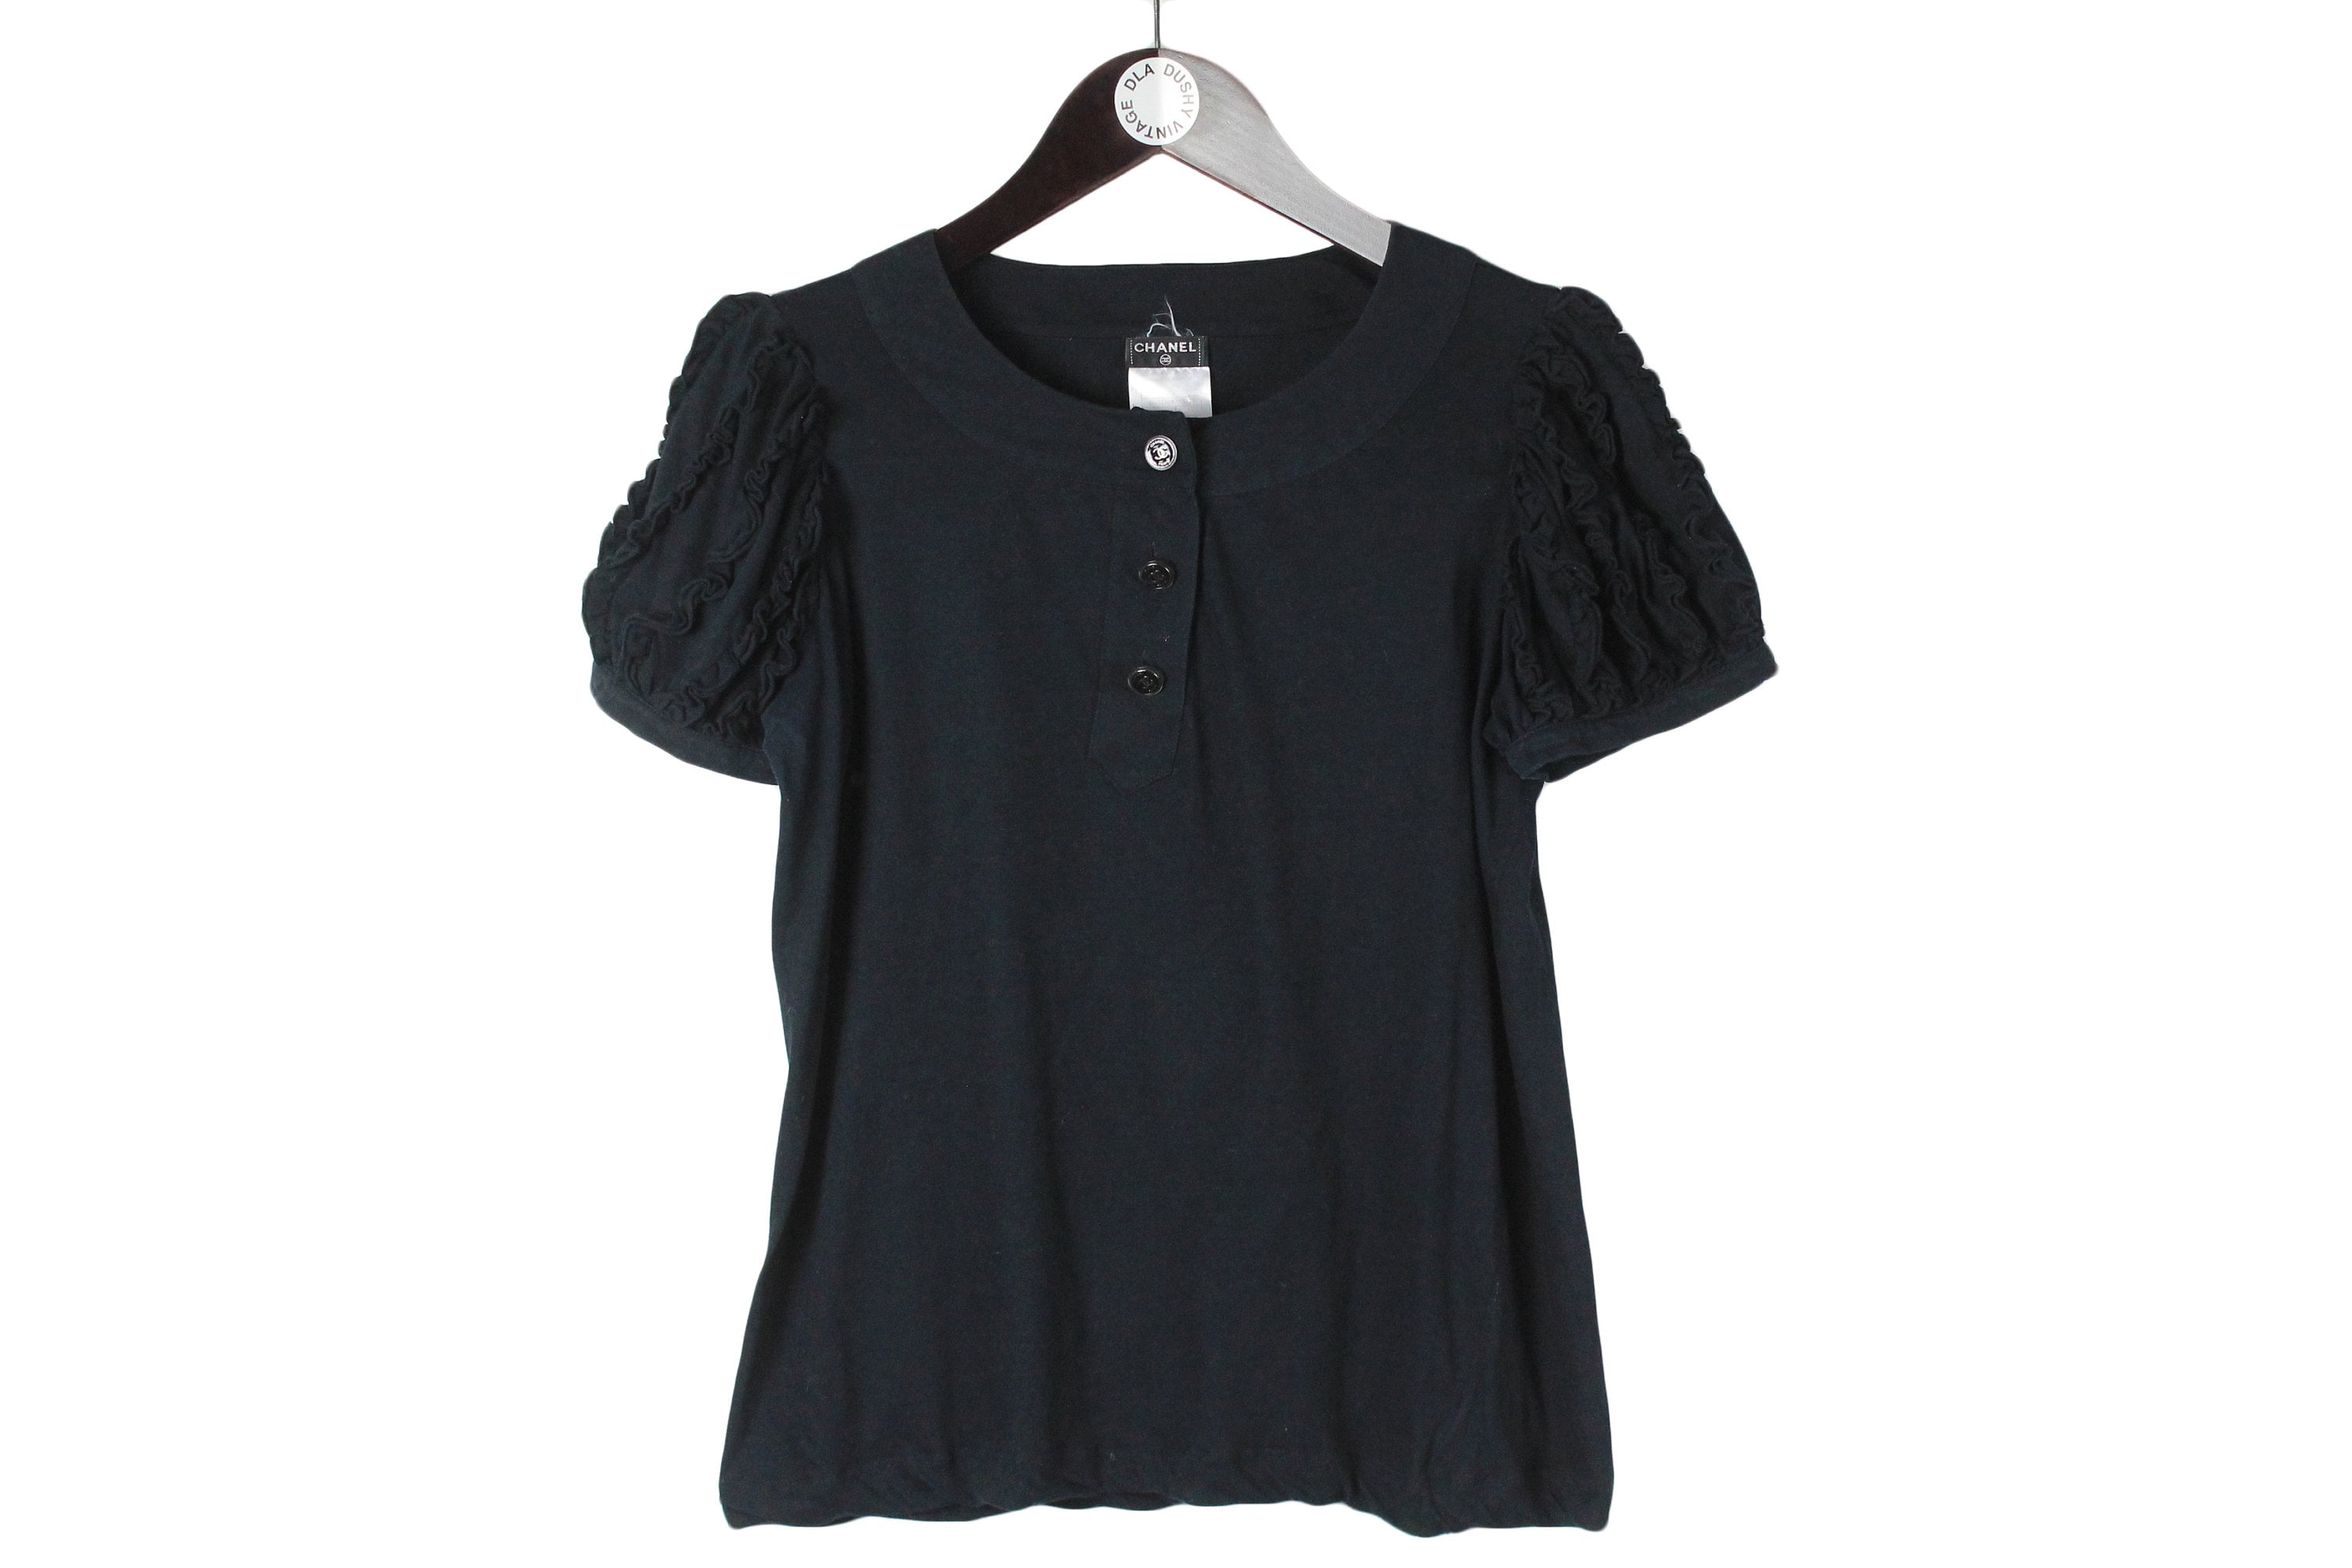 Vintage CHANEL T-shirt Size Women's S Retro Clothing Rare 